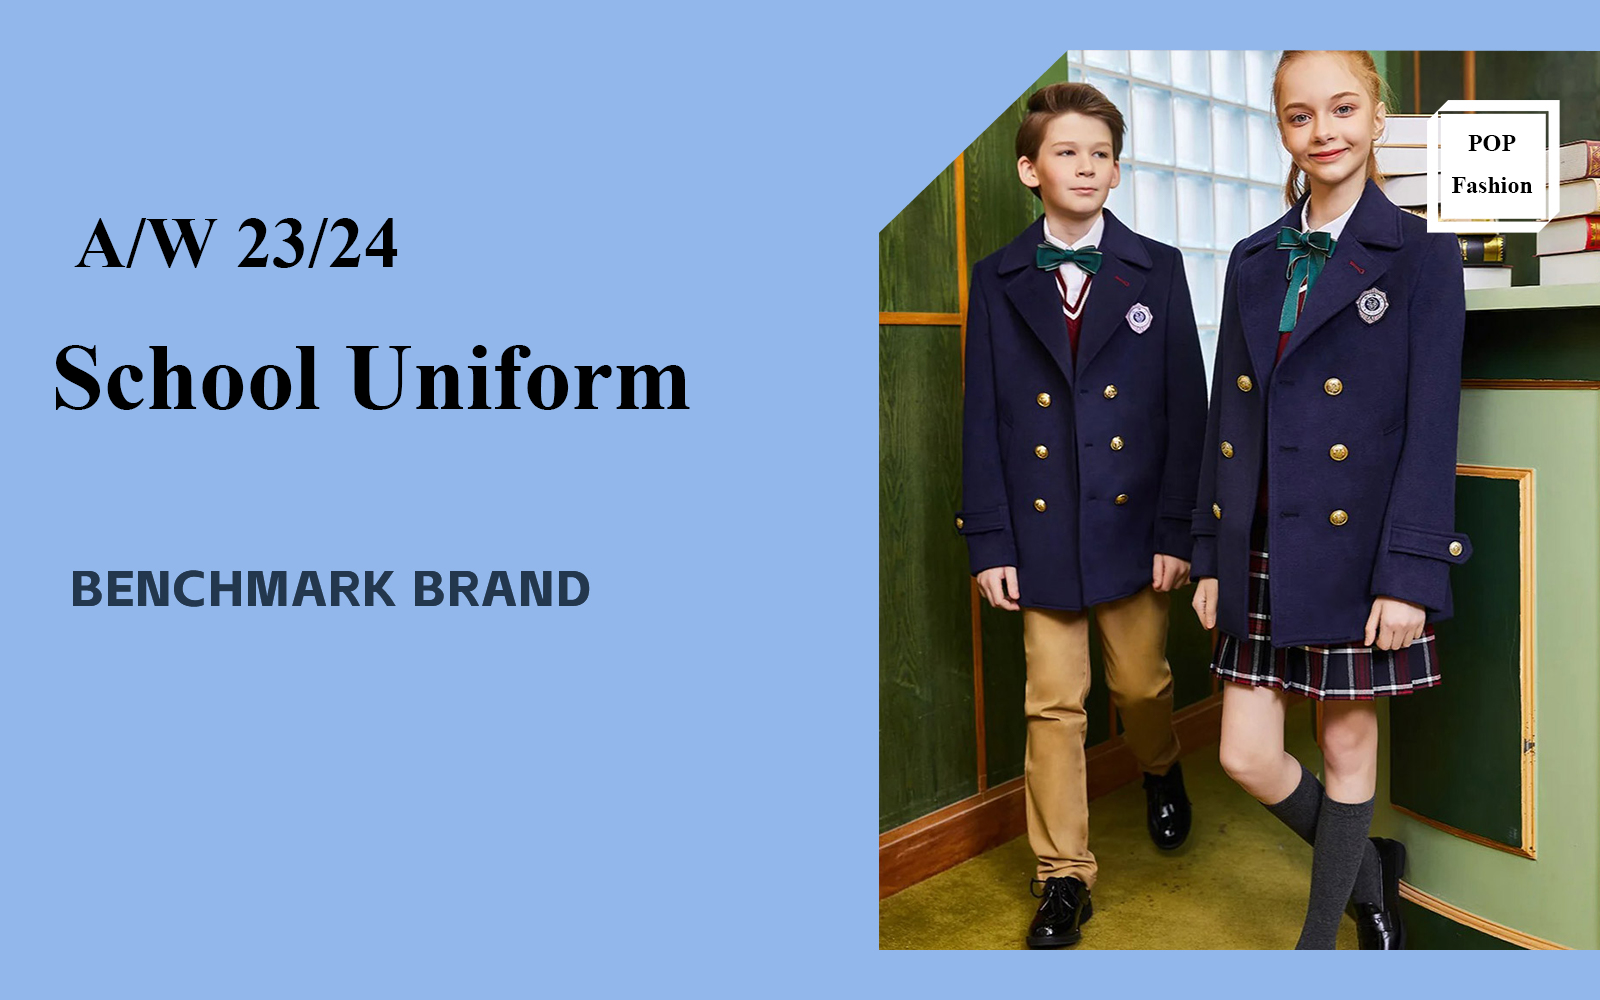 School Uniform -- The Comprehensive Analysis of Kidswear Benchmark Brand